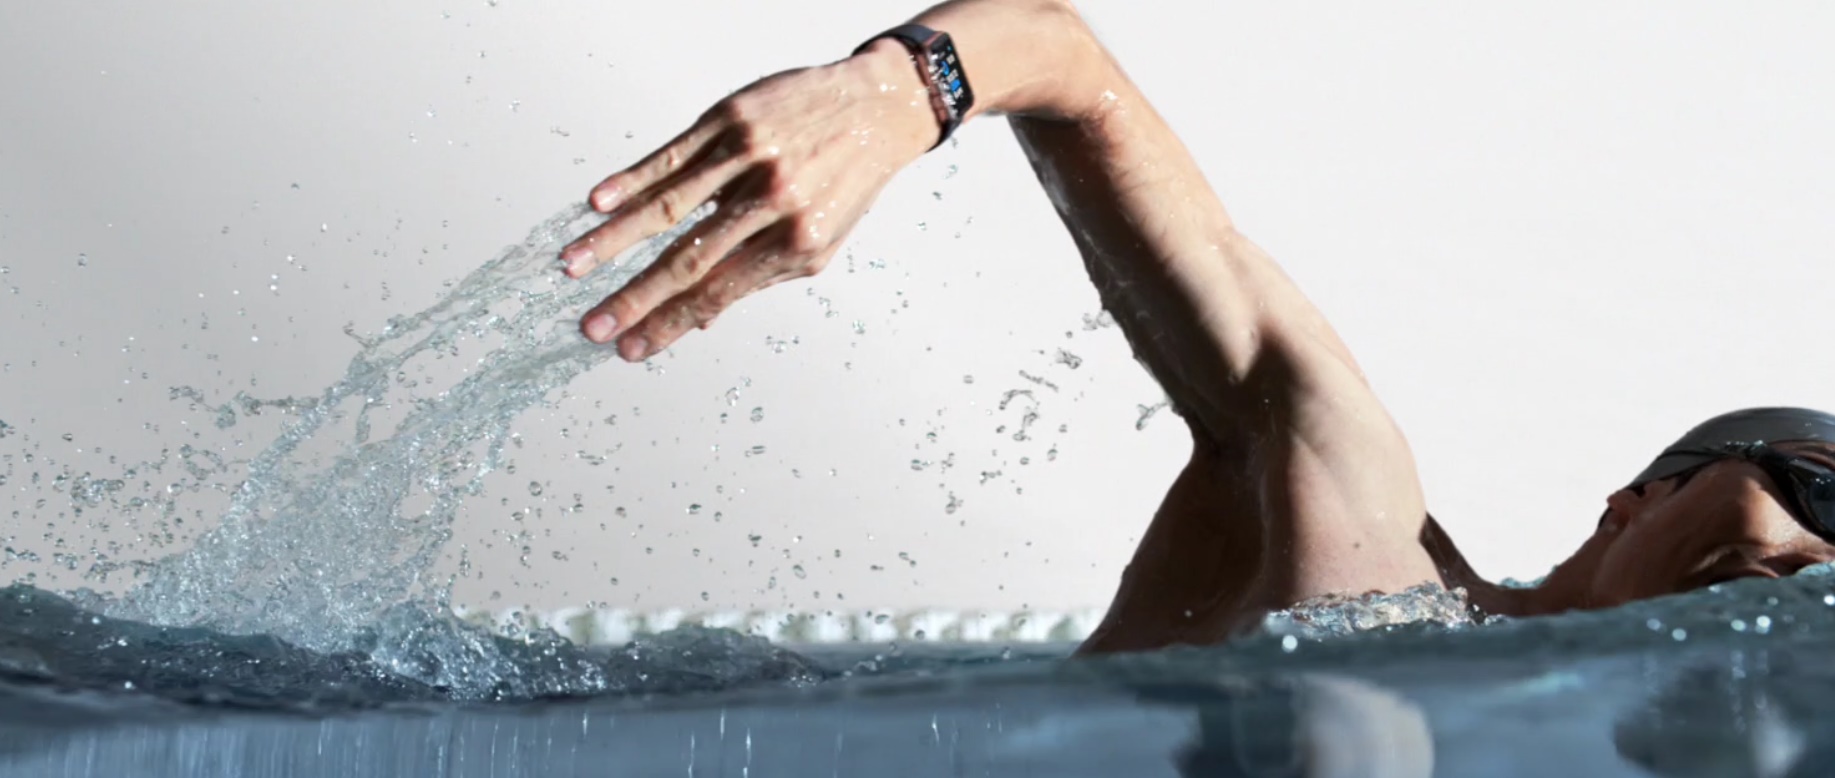 Apple Watch Series 2 is swim-proof, but not waterproof